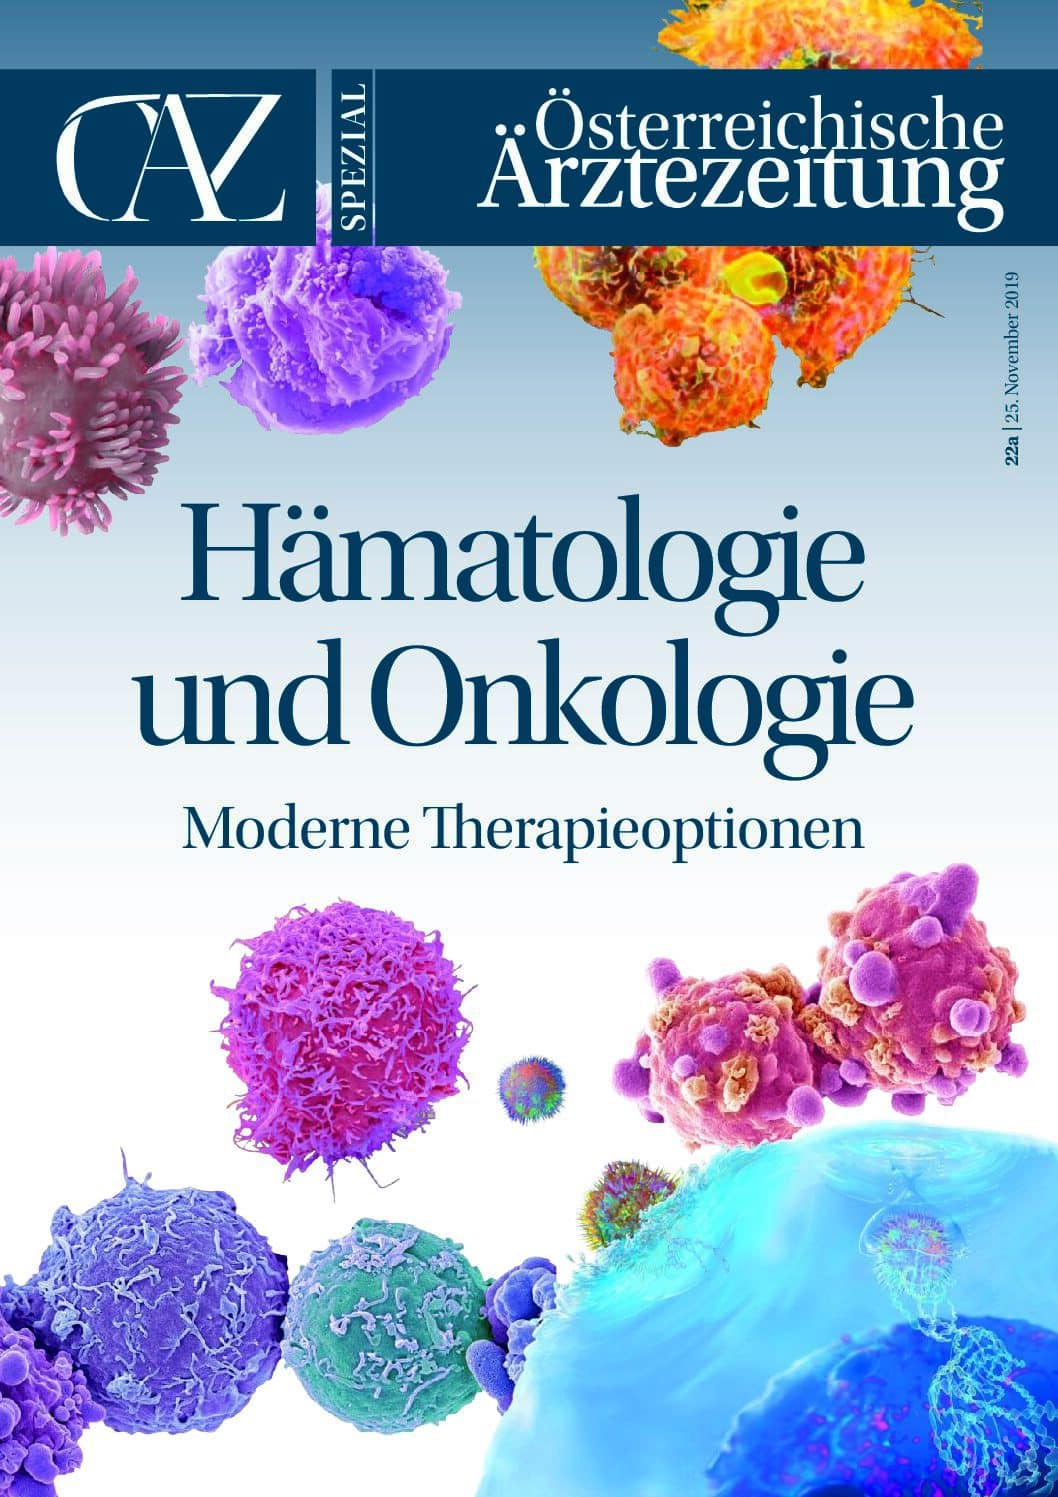 OAZ Spezial Haematologie-Onkologie-2019